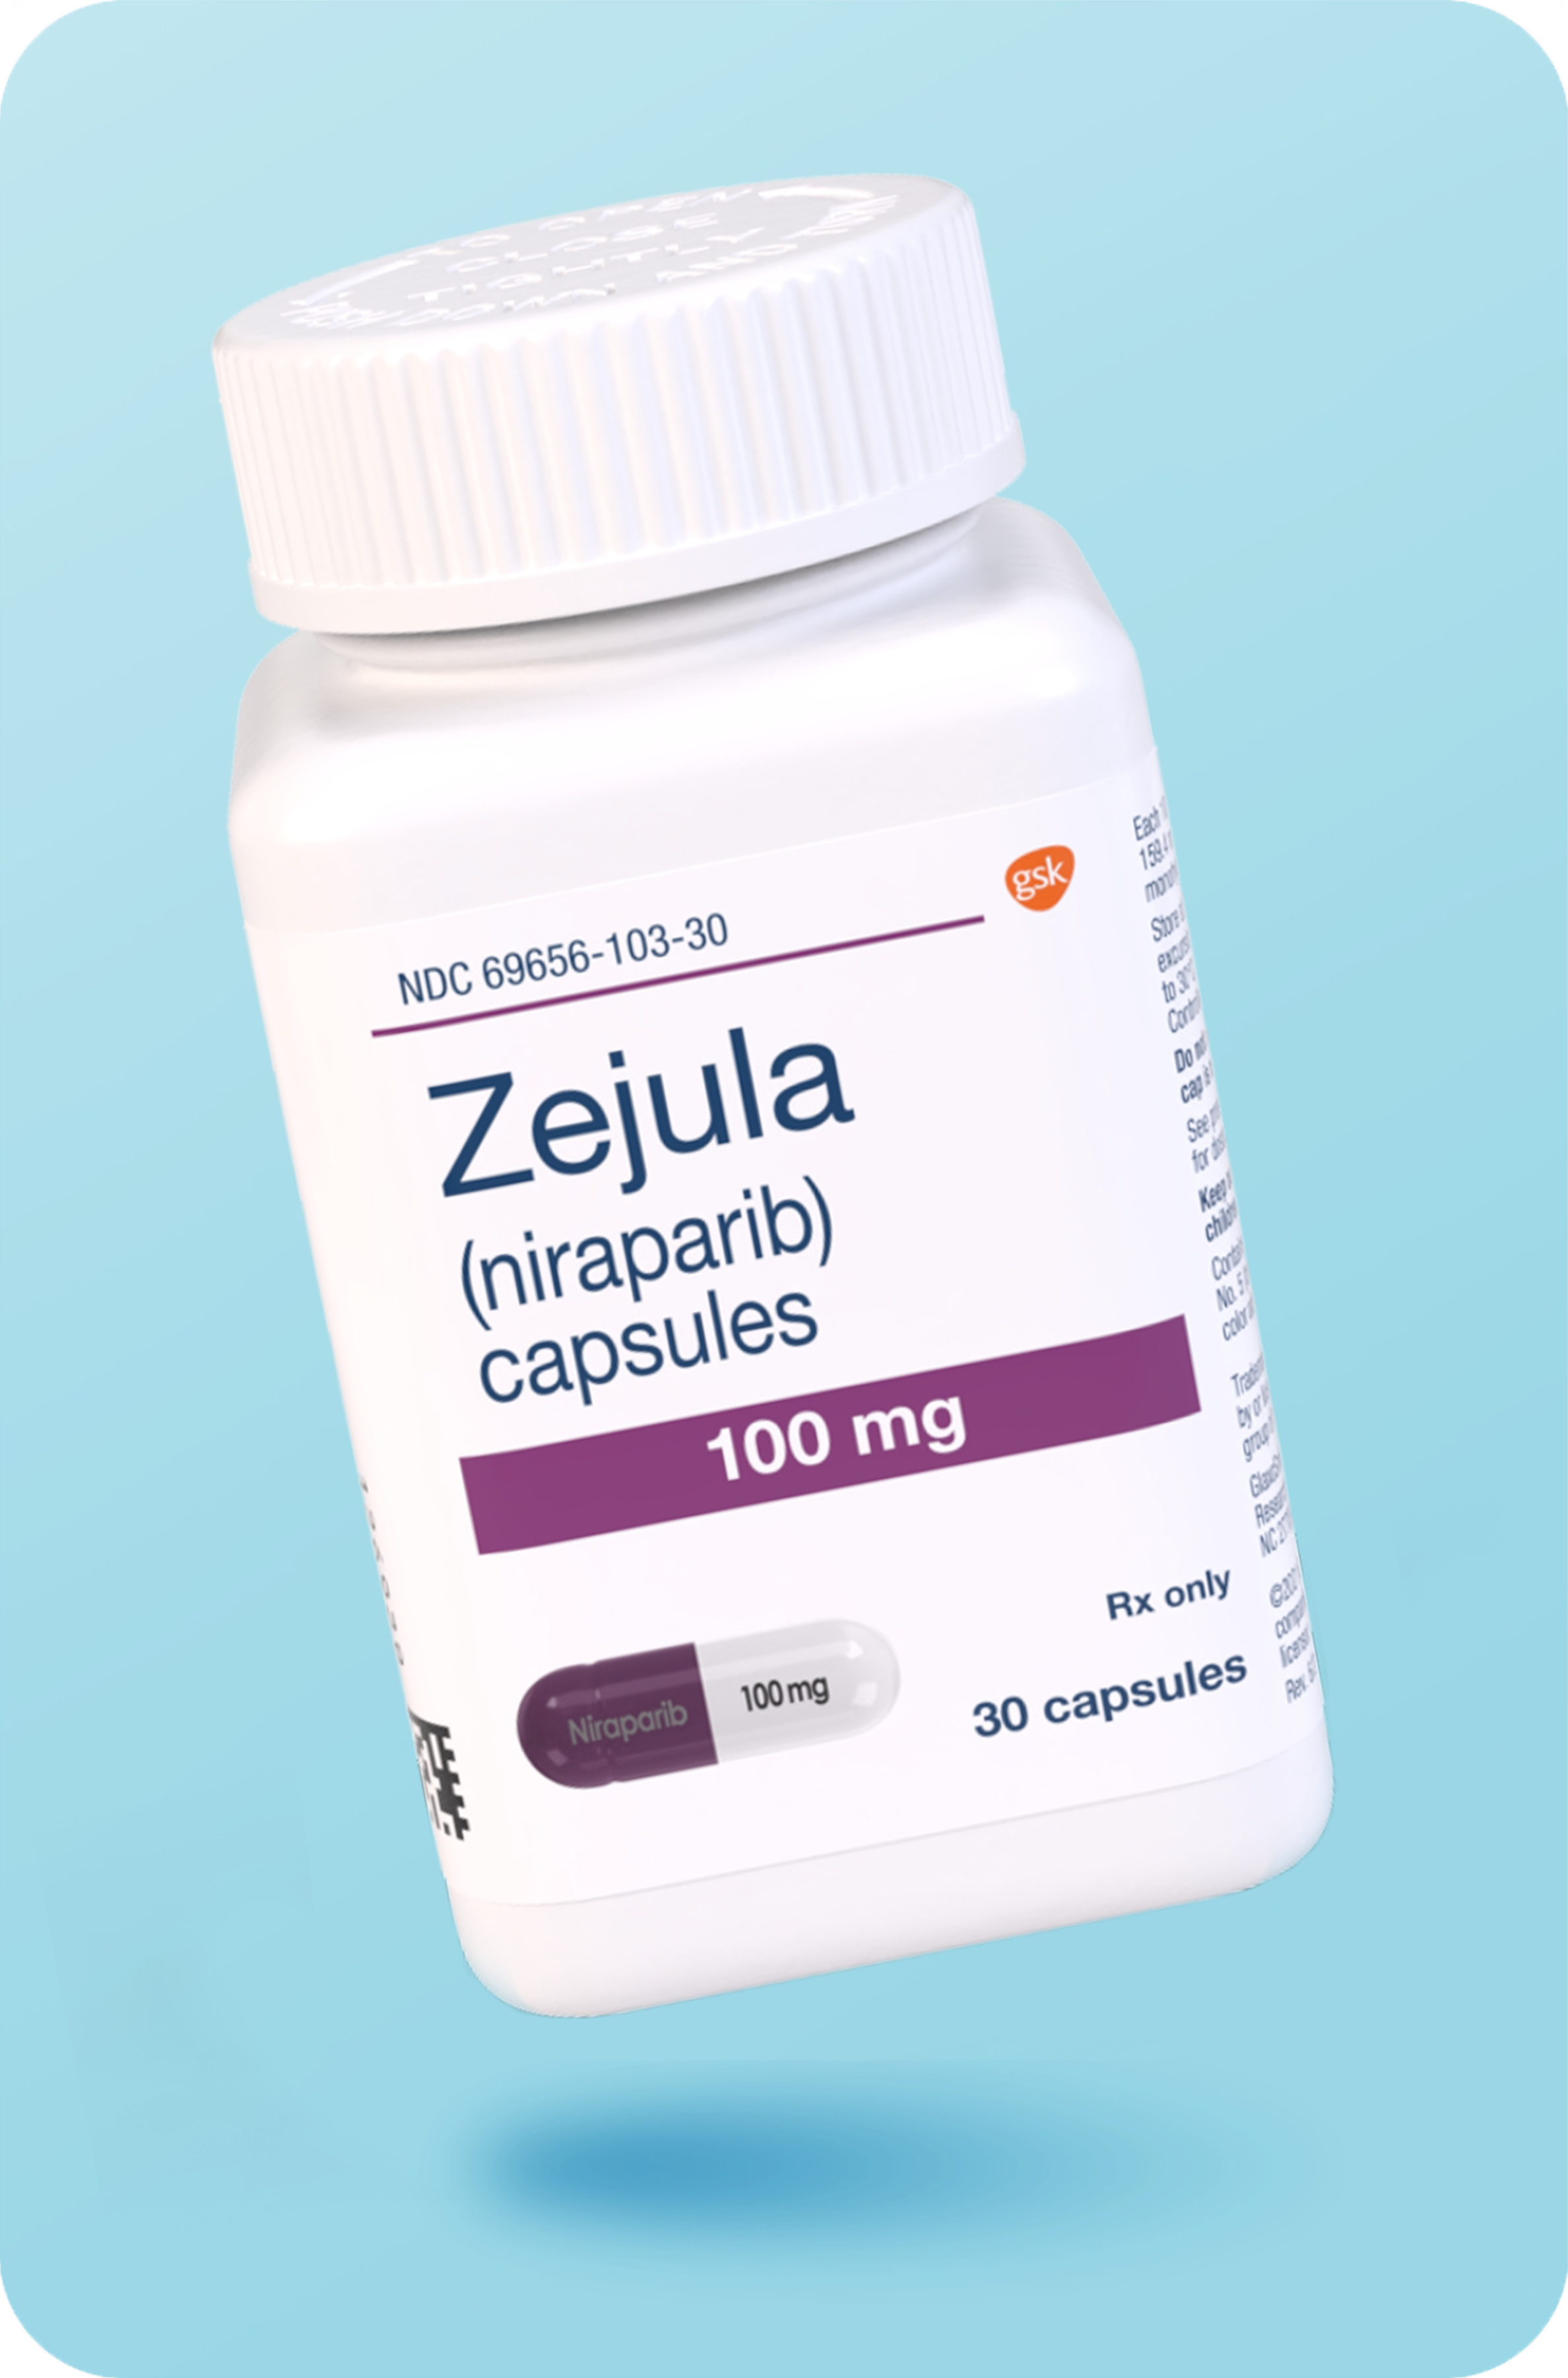 ZEJULA (niraparib) pill bottle